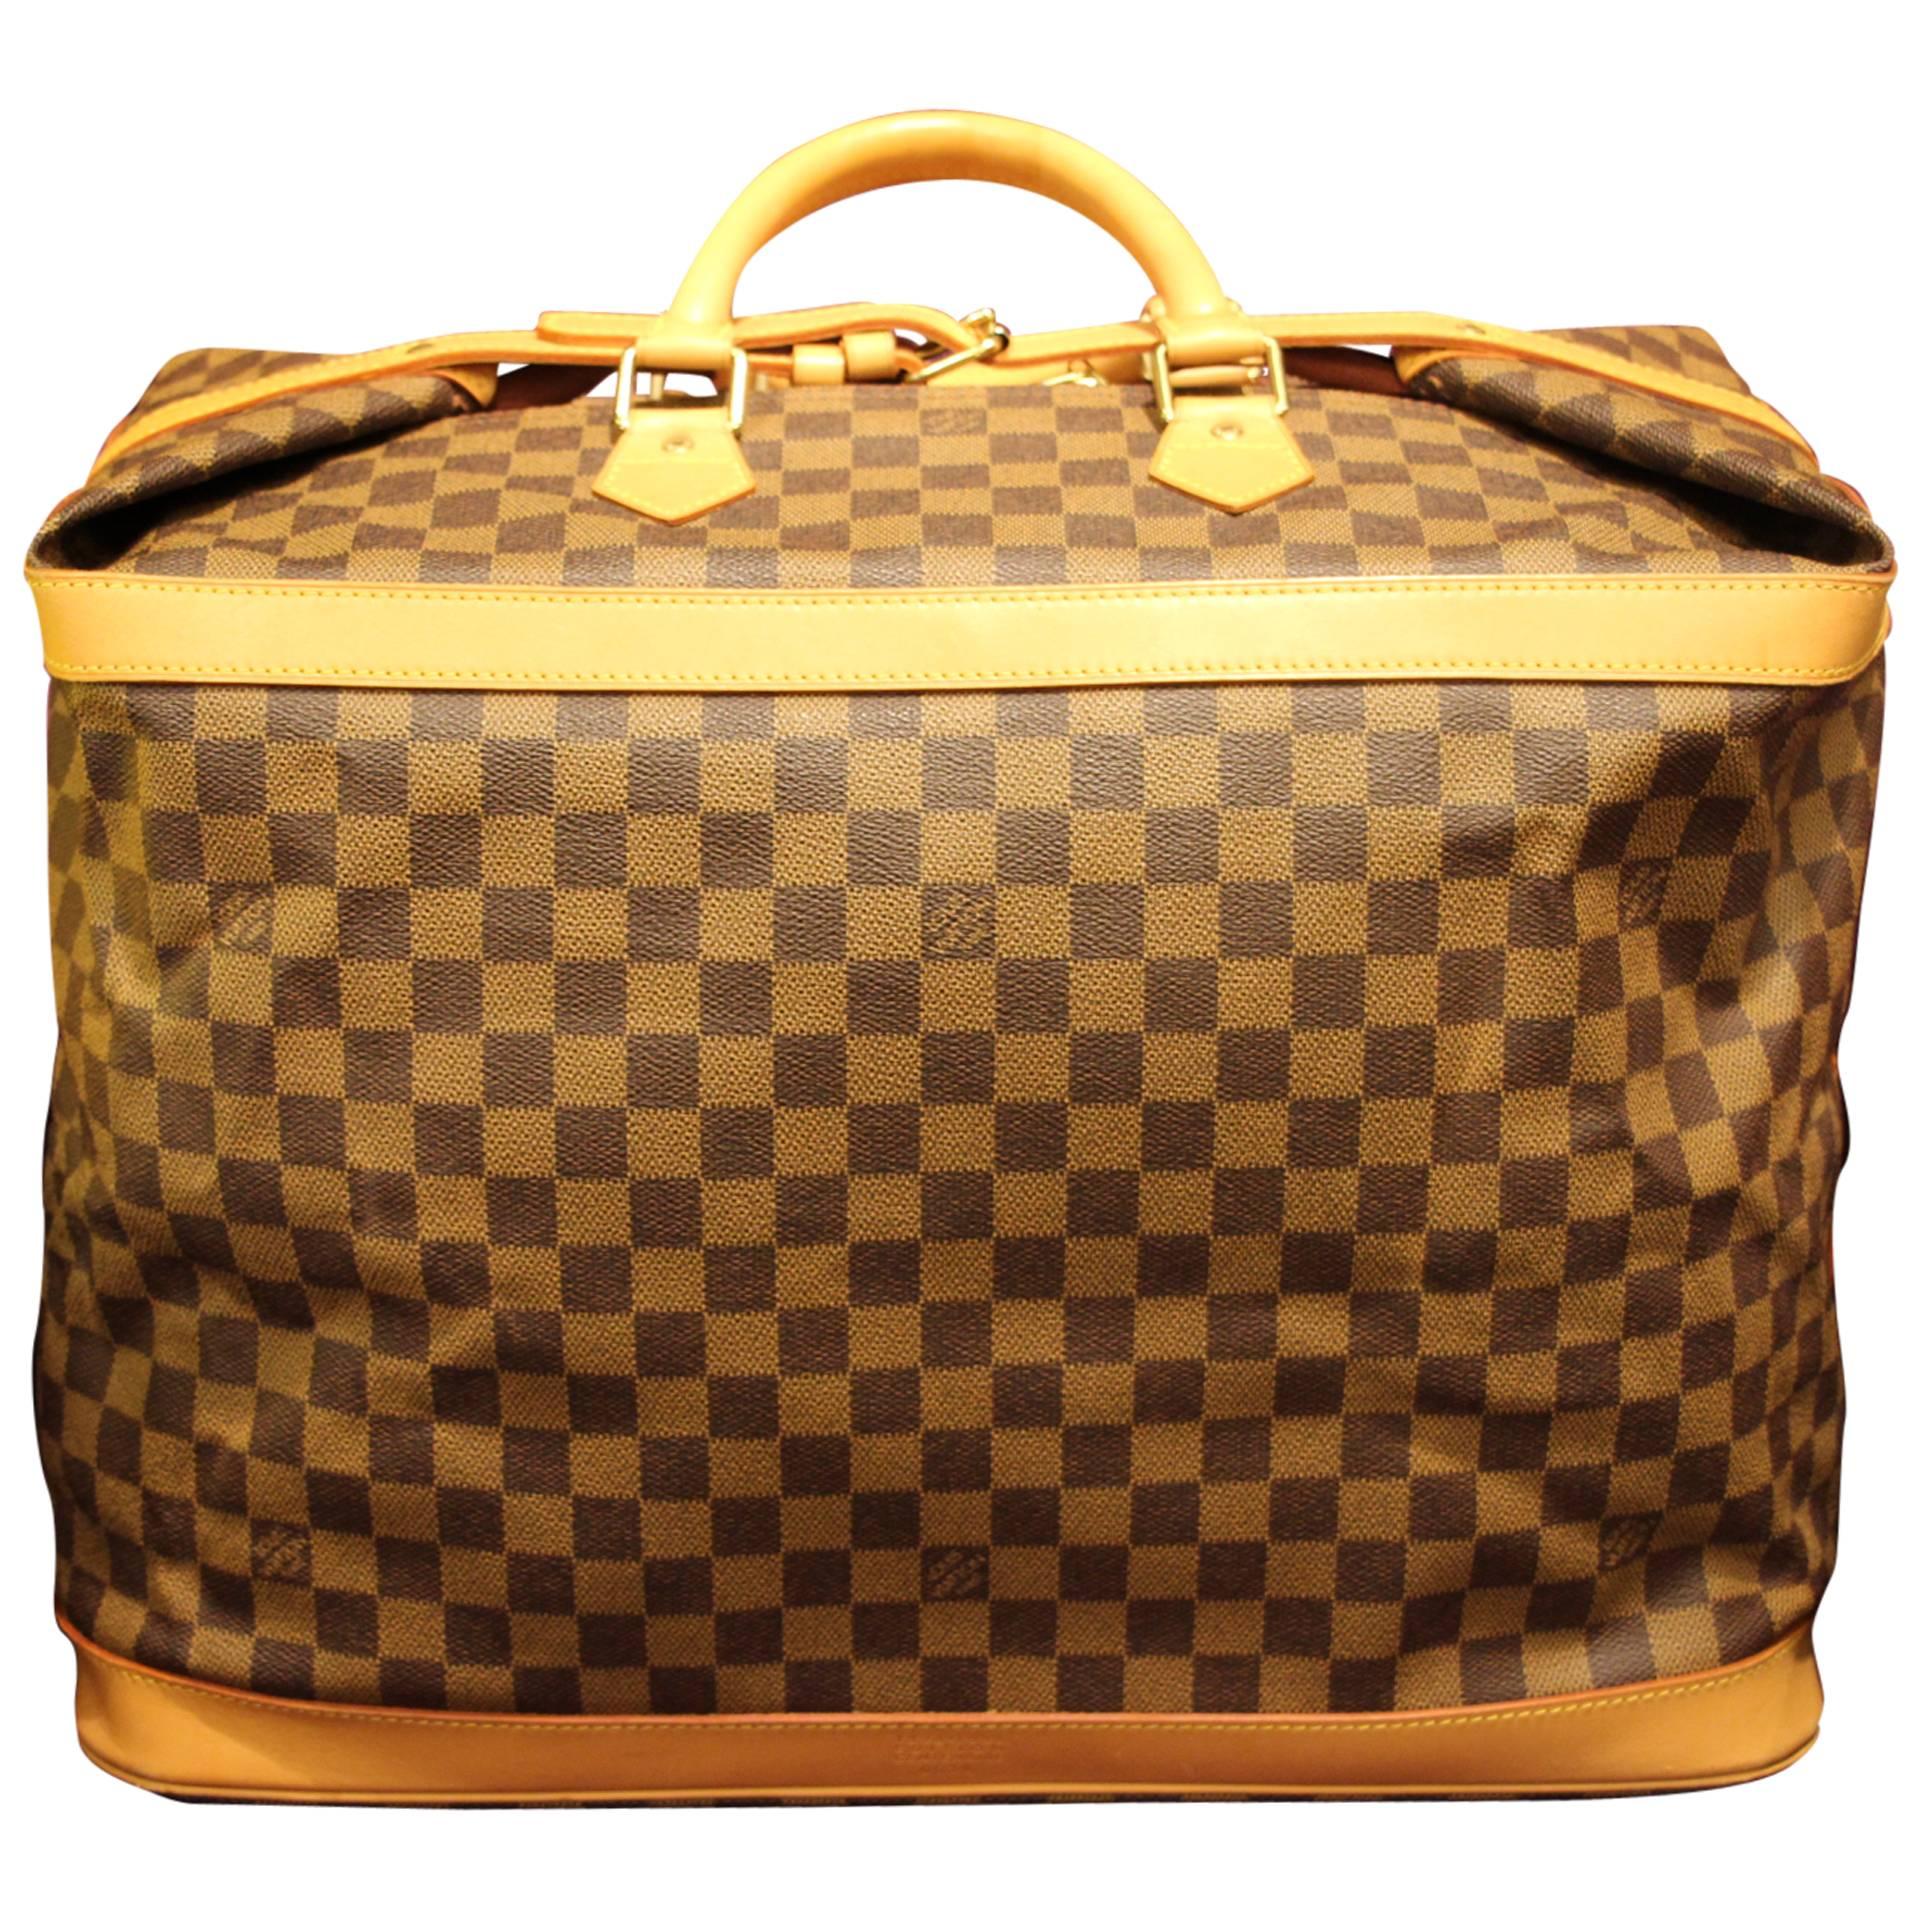 Special Edition Louis Vuitton Travel Bag, Damier Canvas